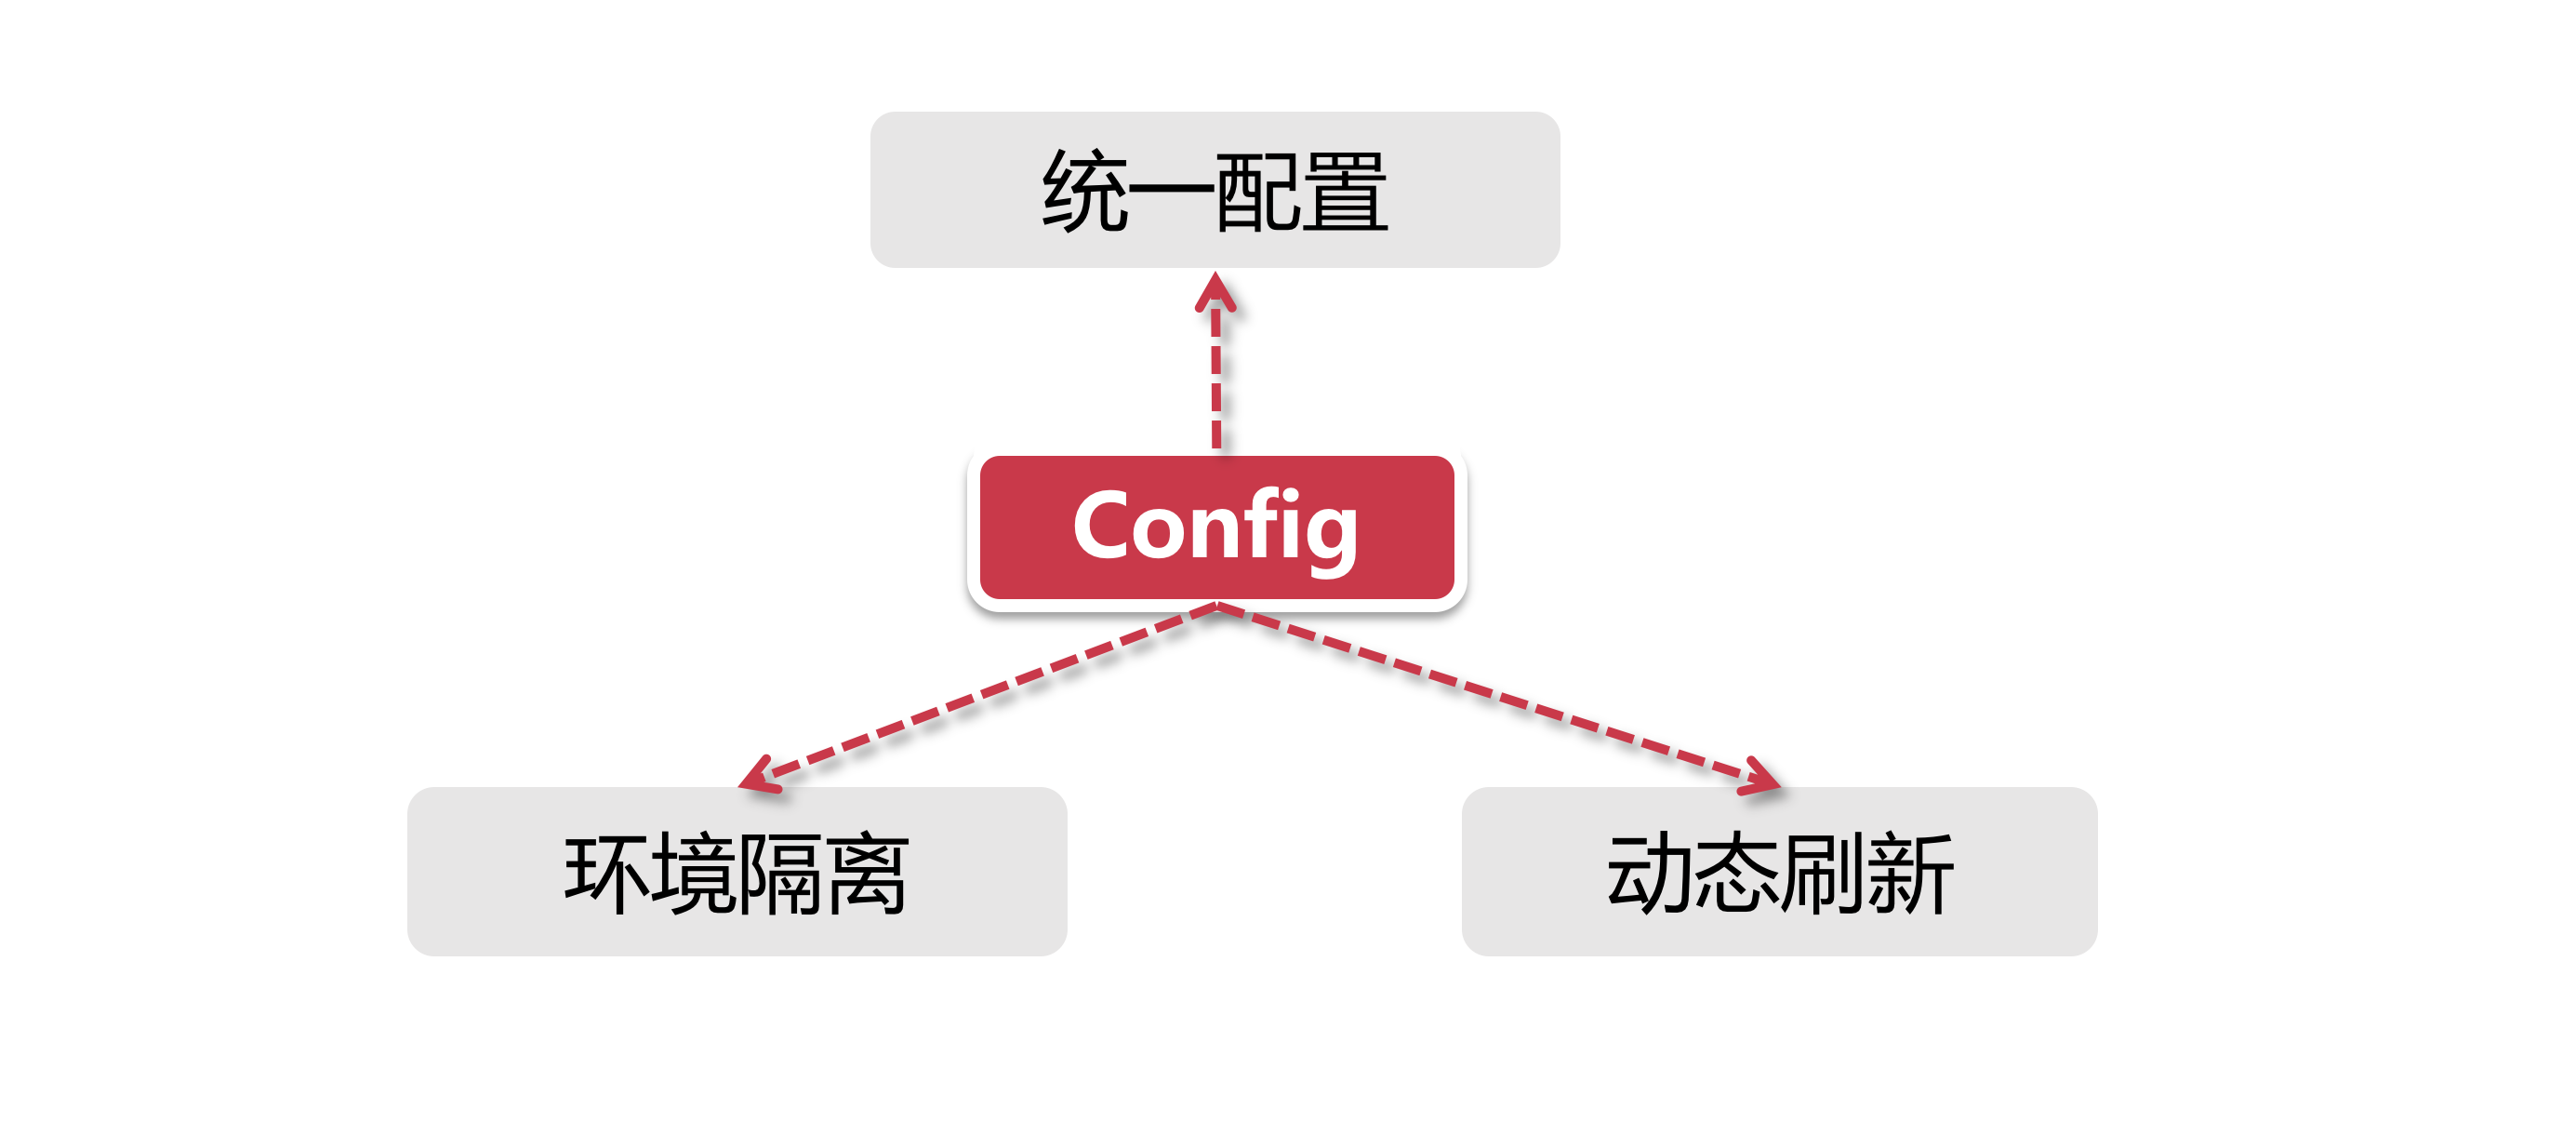 Spring Cloud中的配置管理组件config核心功能和原理解析 慕课网原创 慕课网 手记